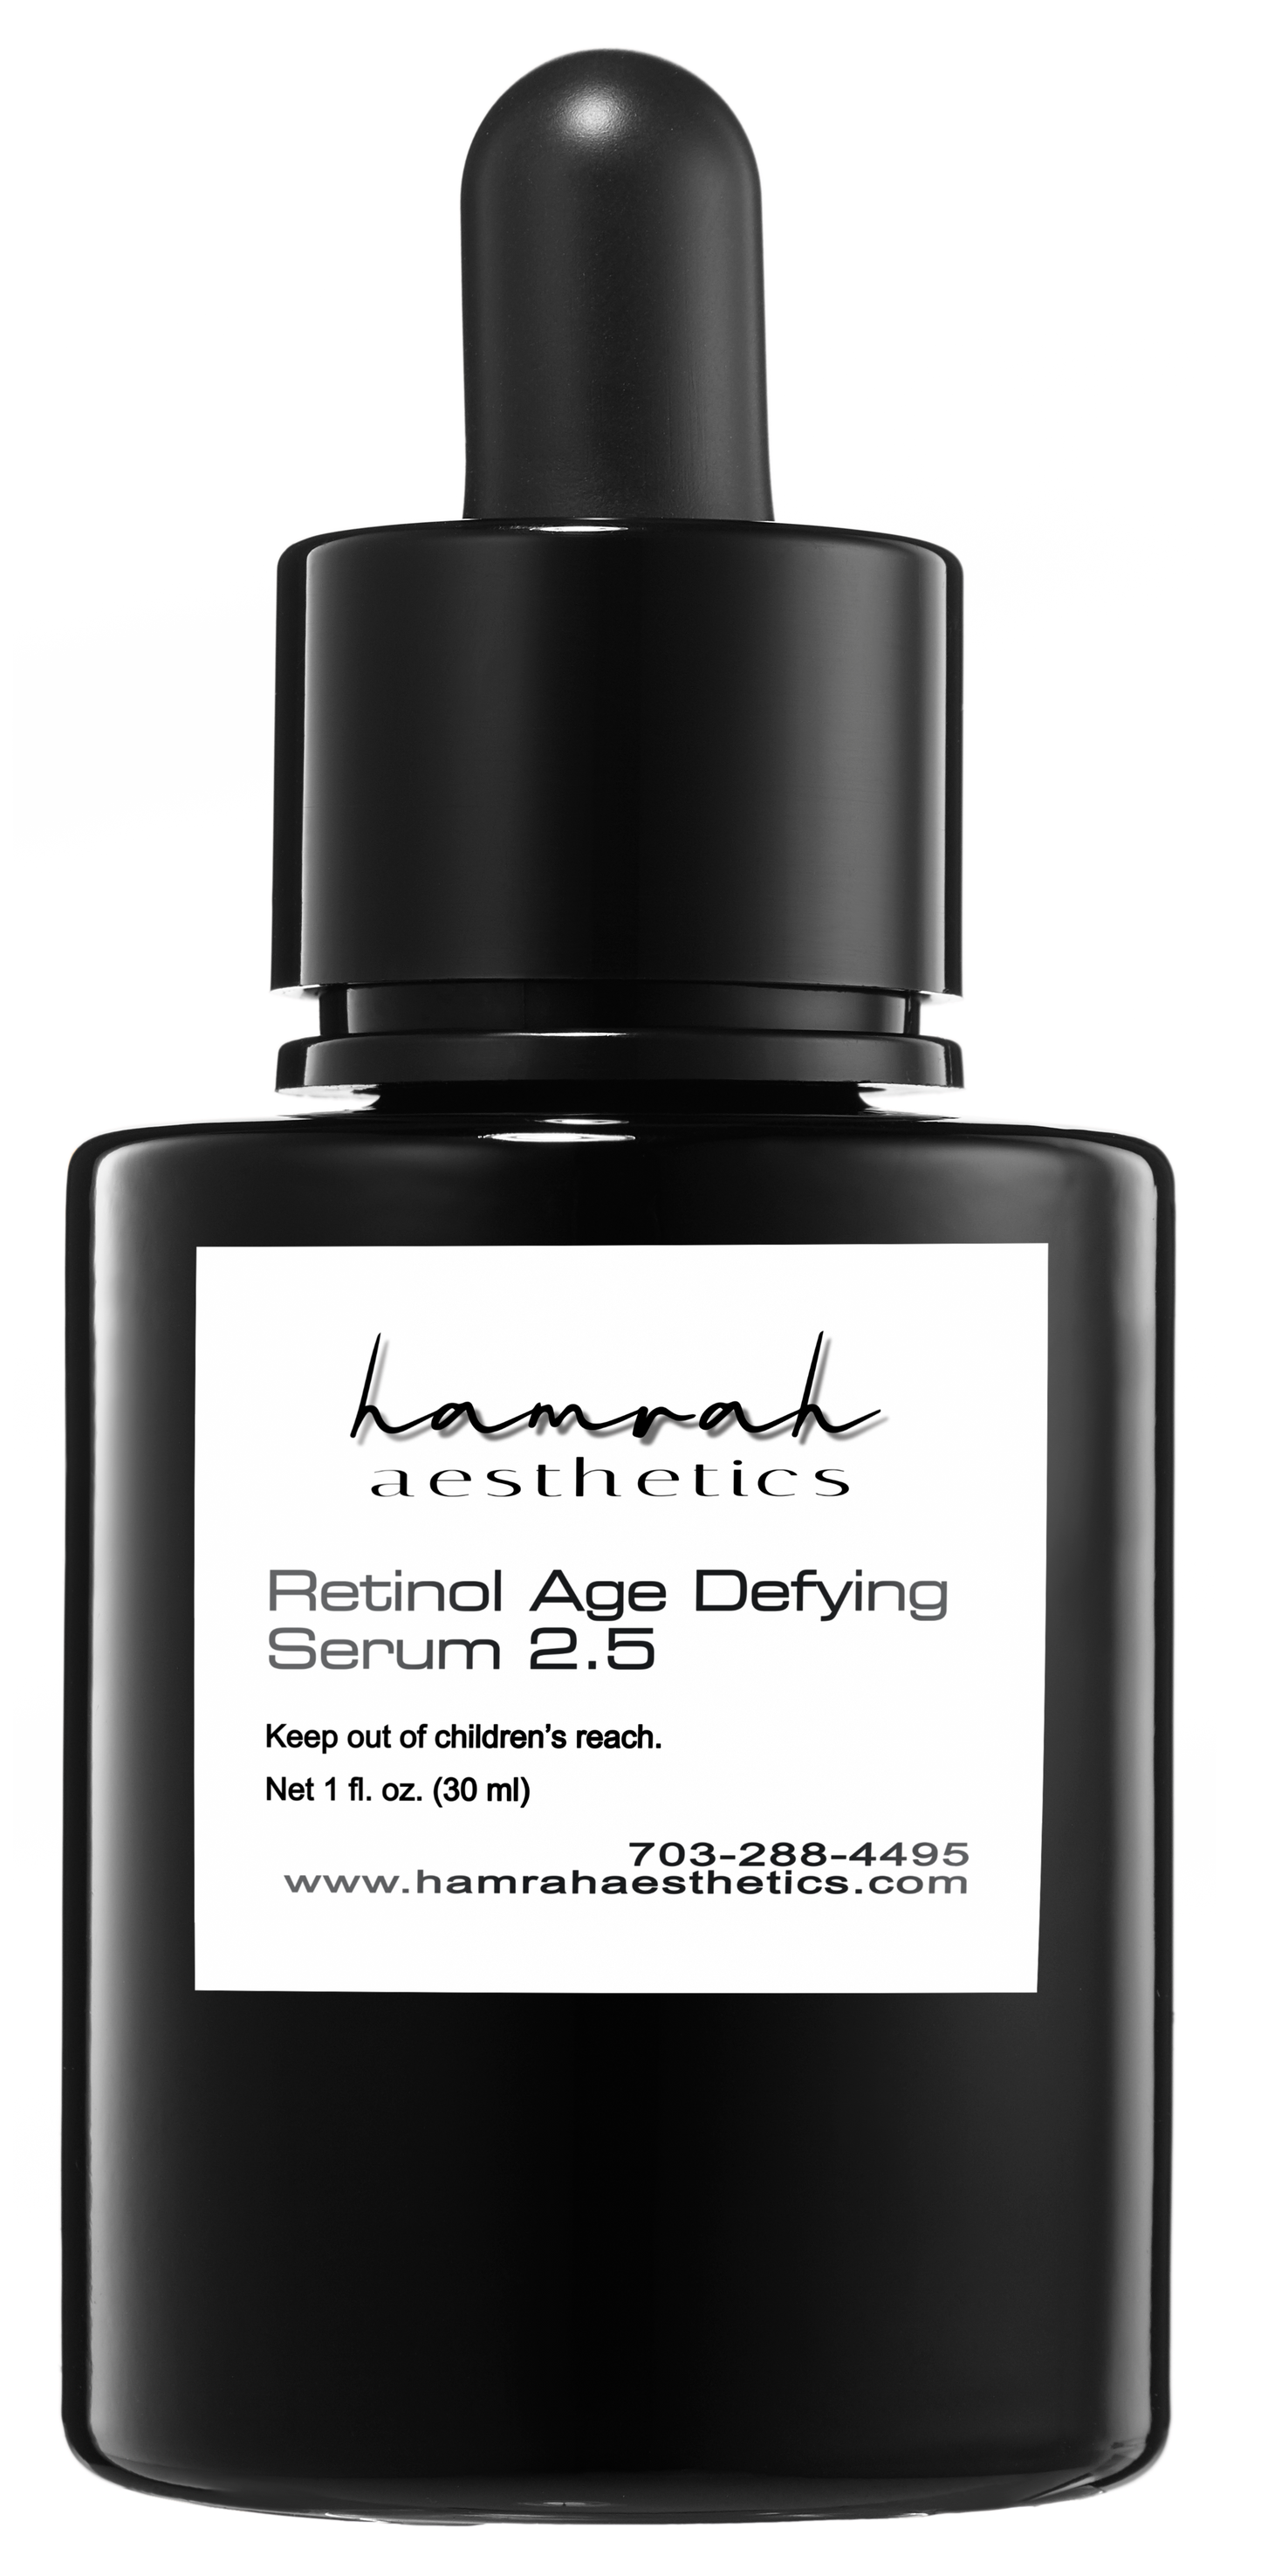 Retinol Age Defying Serum 2.5